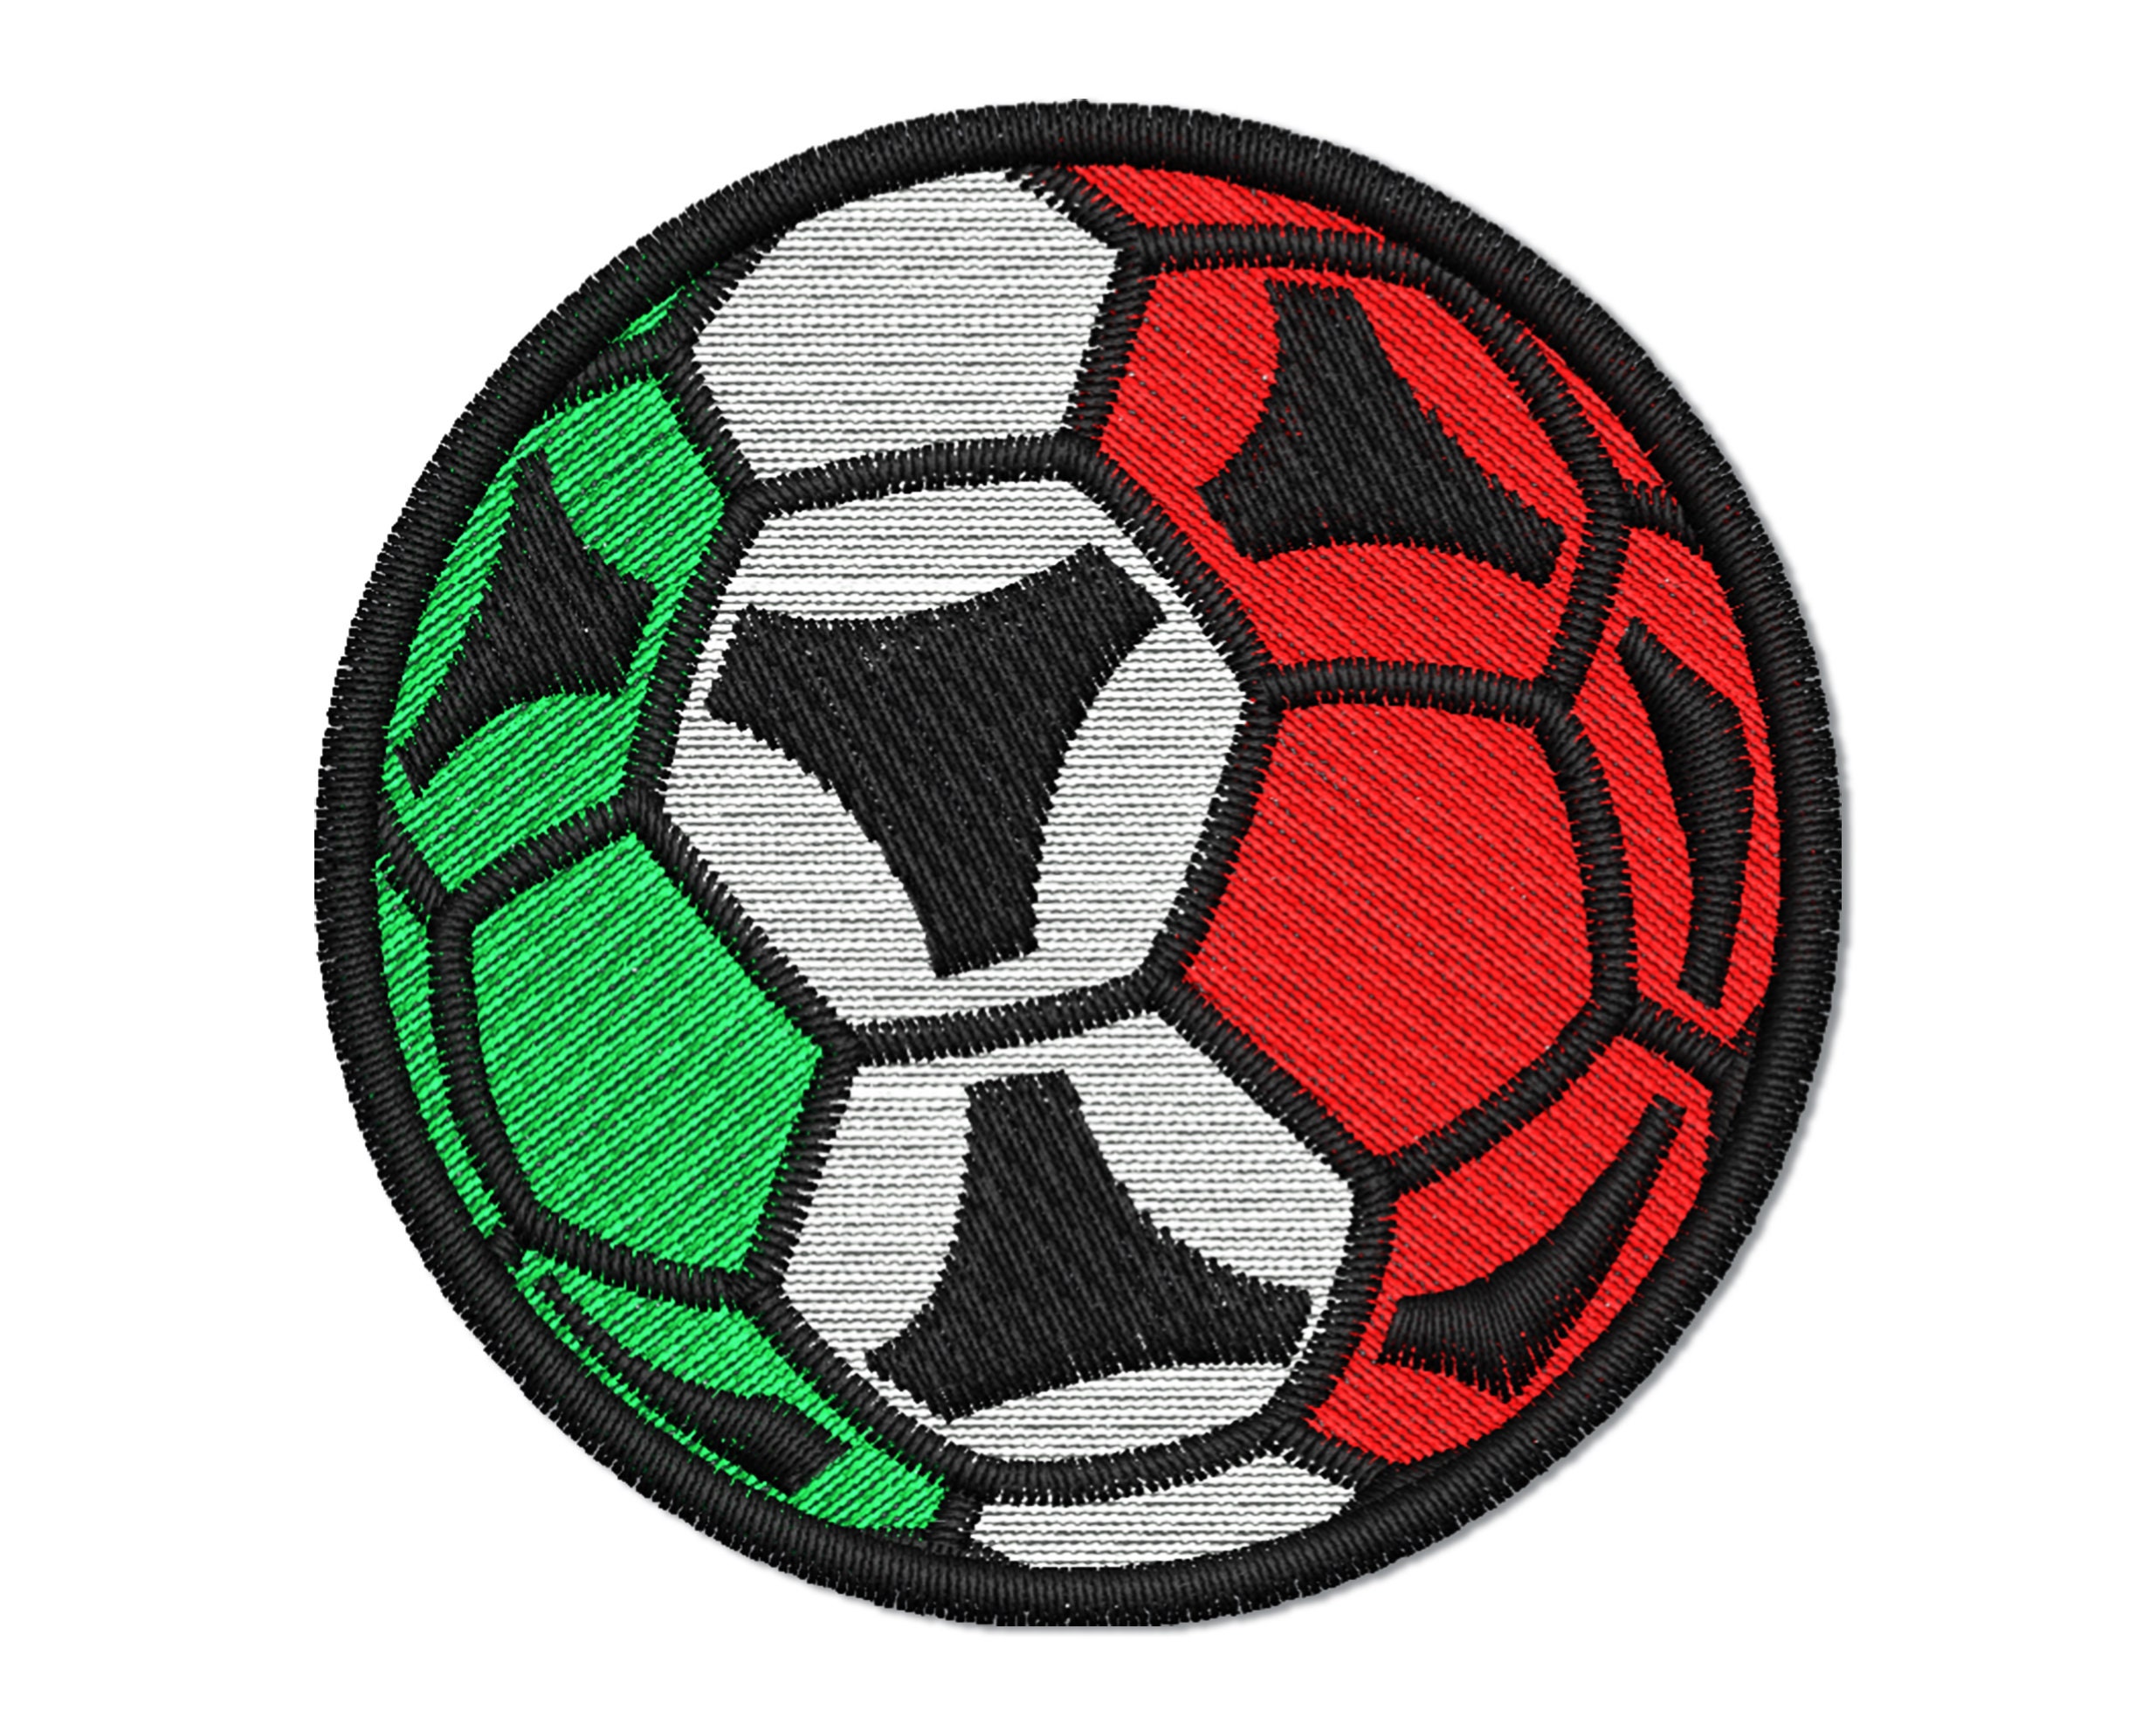 Moule à Gâteau  Ballon de Football - 22,5 x 11,5cm, Vol. ≈ 2 500 ml -  Artgato